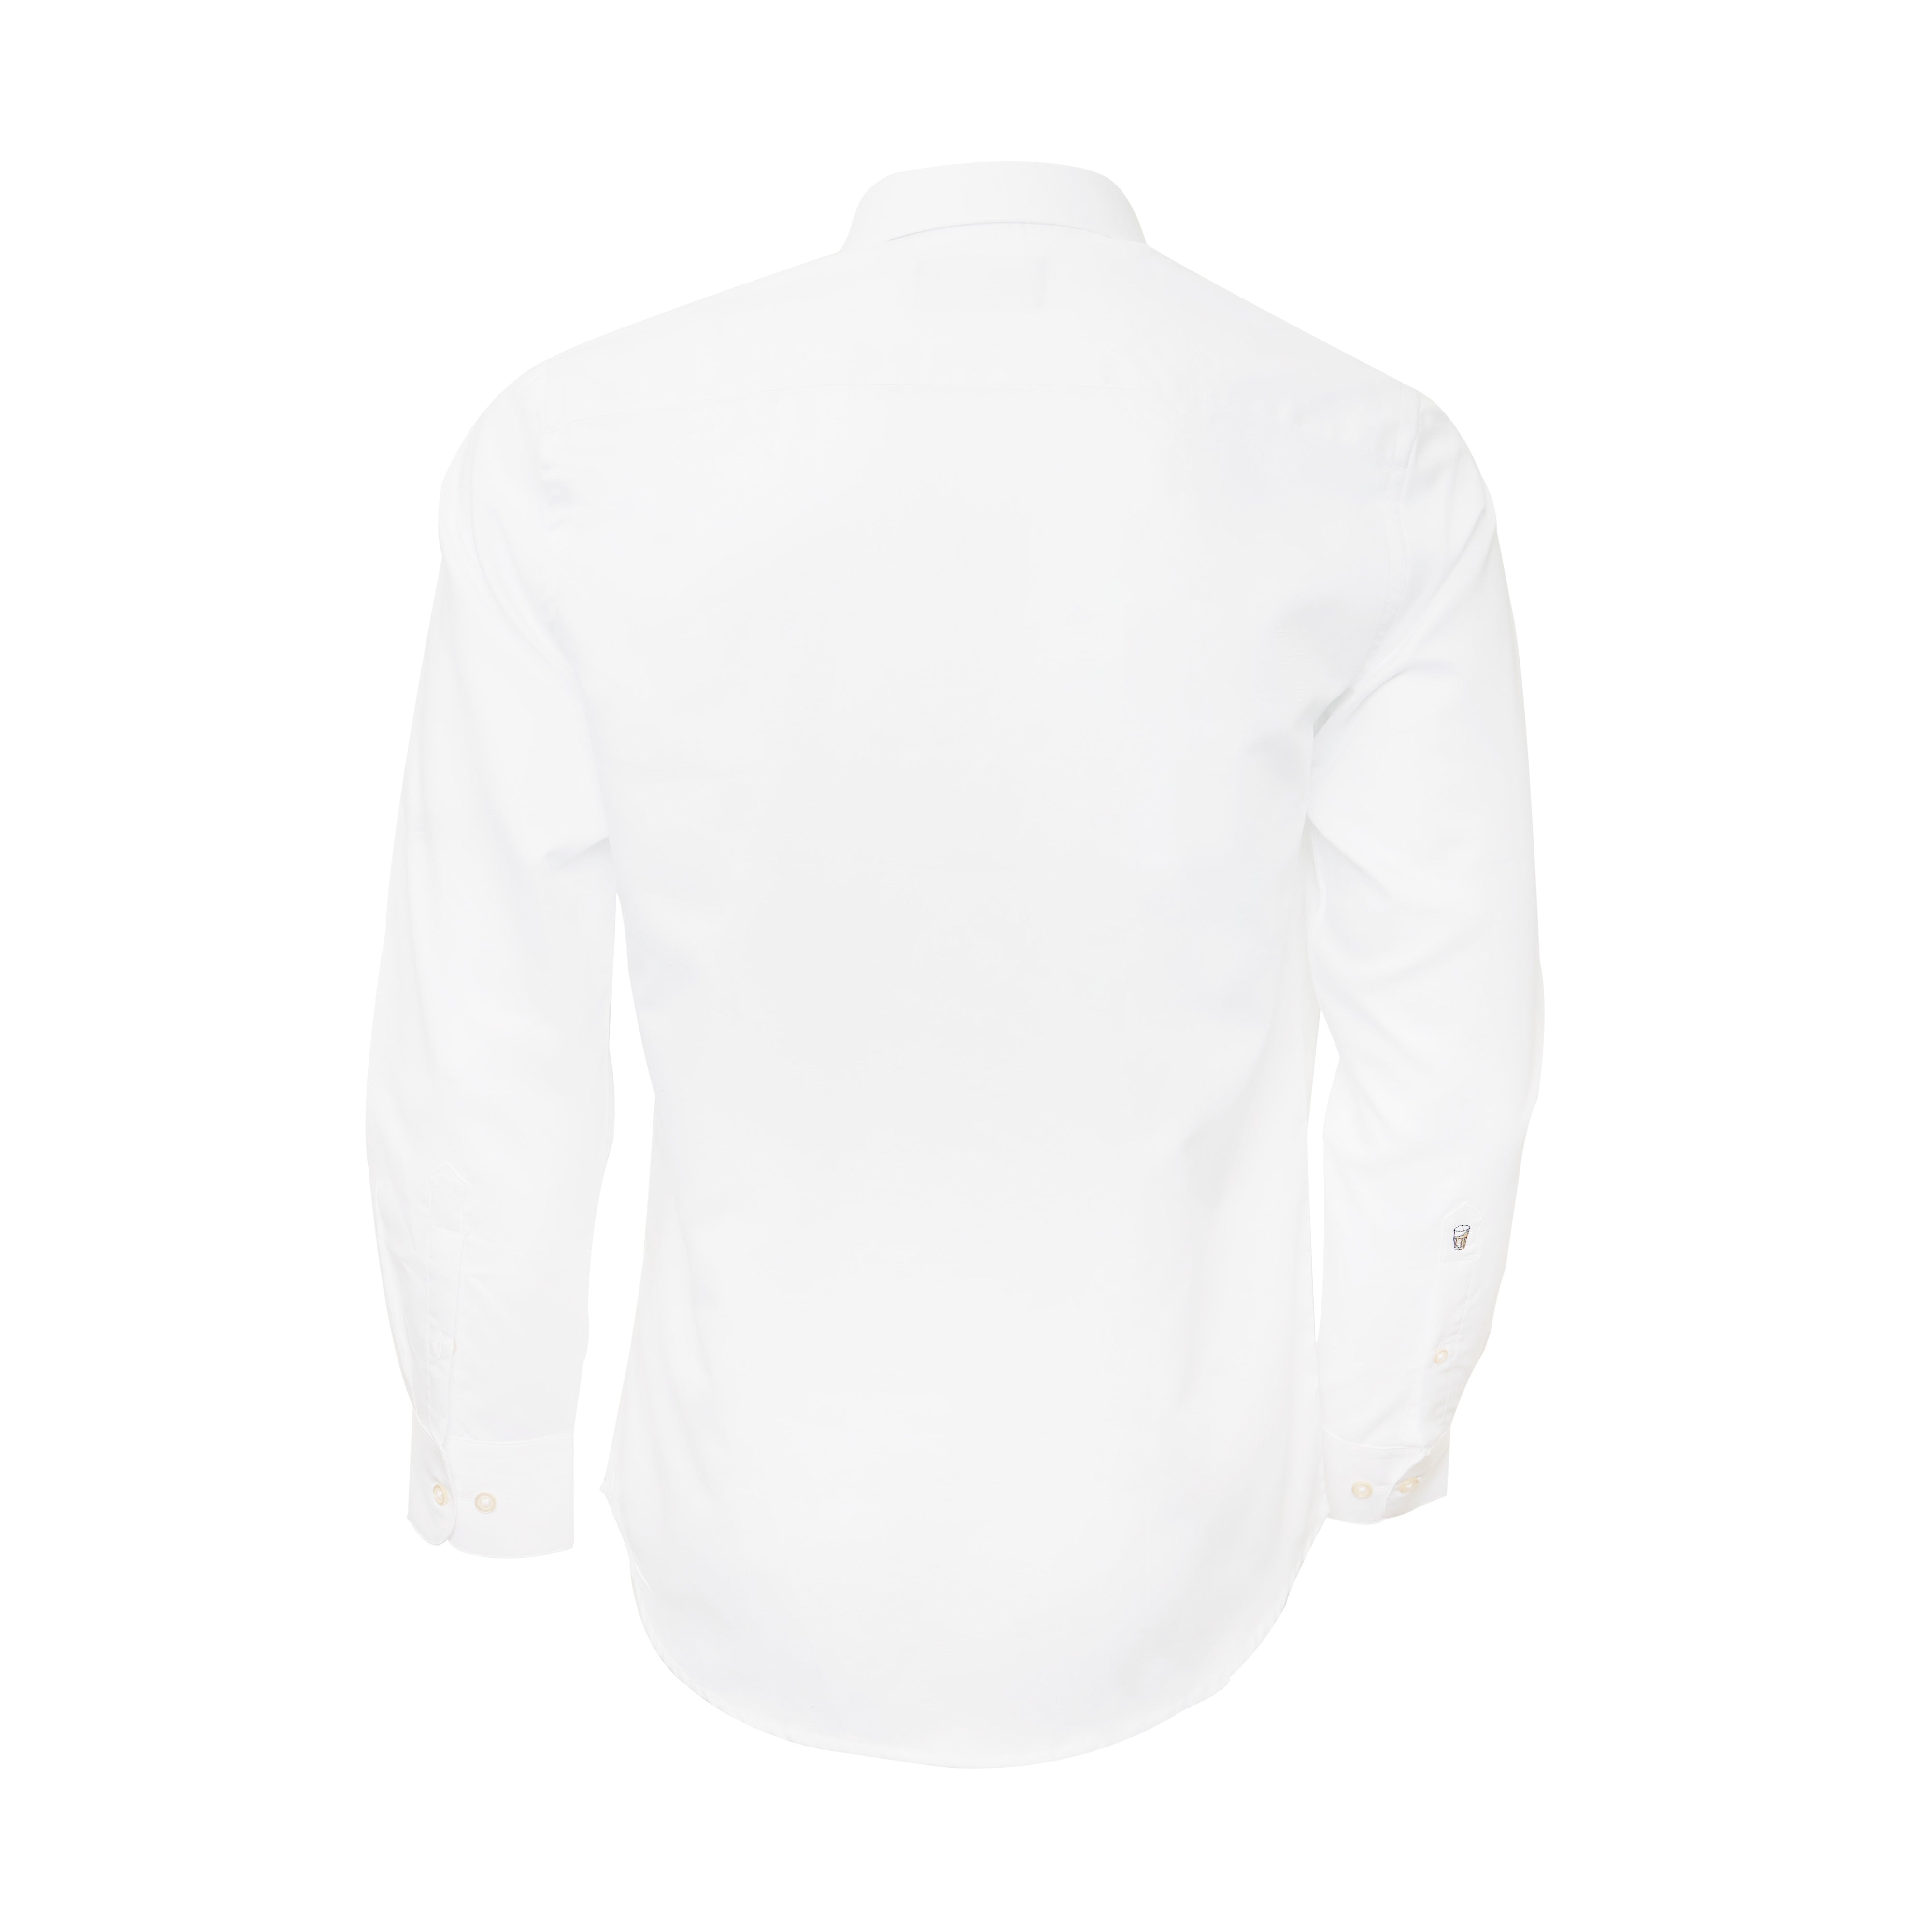 Supima Cotton White Full-sleeved shirt